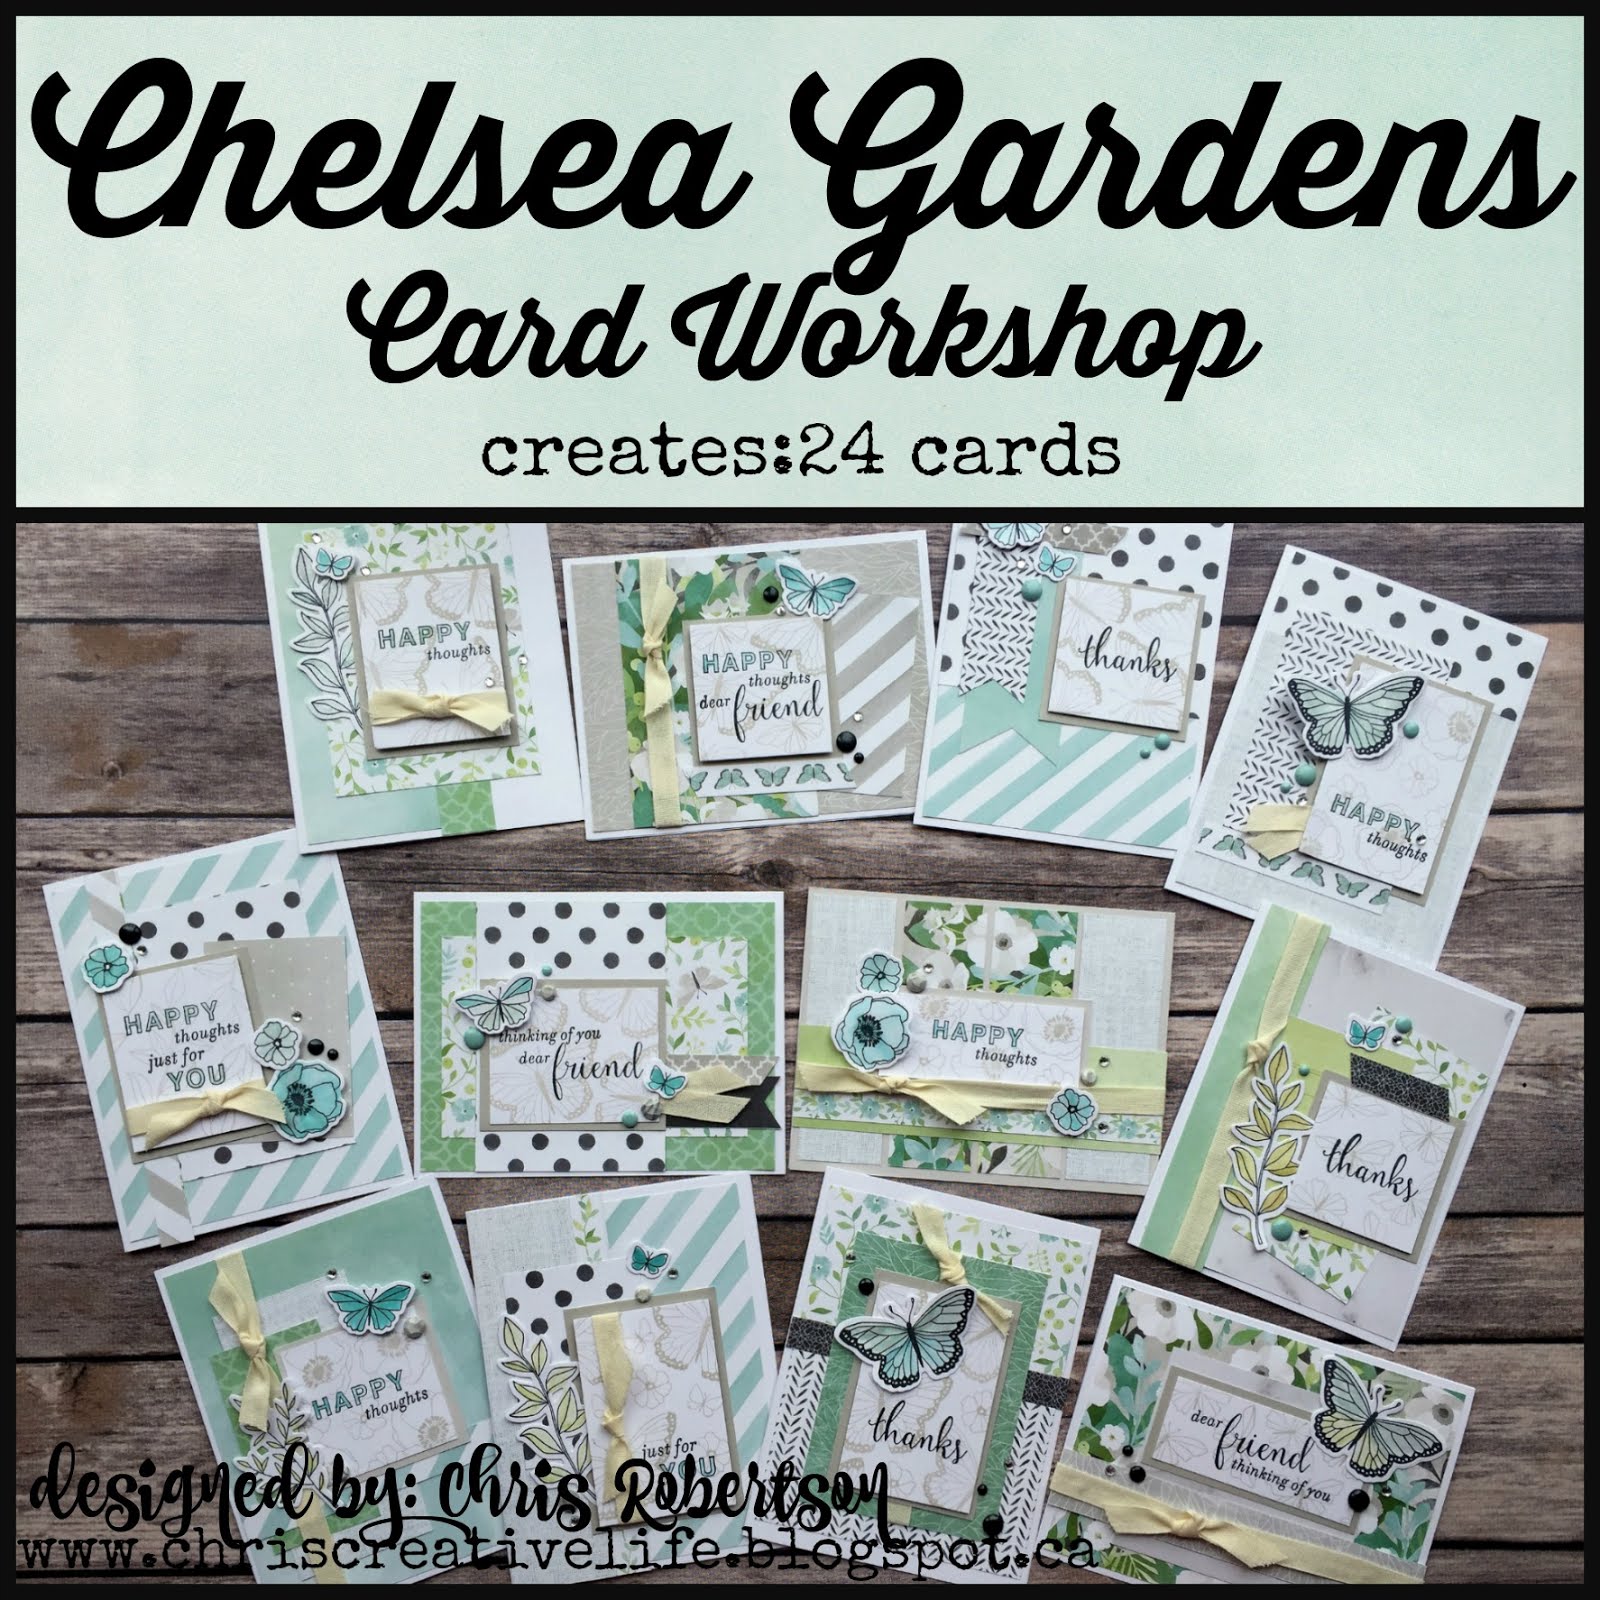 Chelsea Garden Cardmaking Workshop